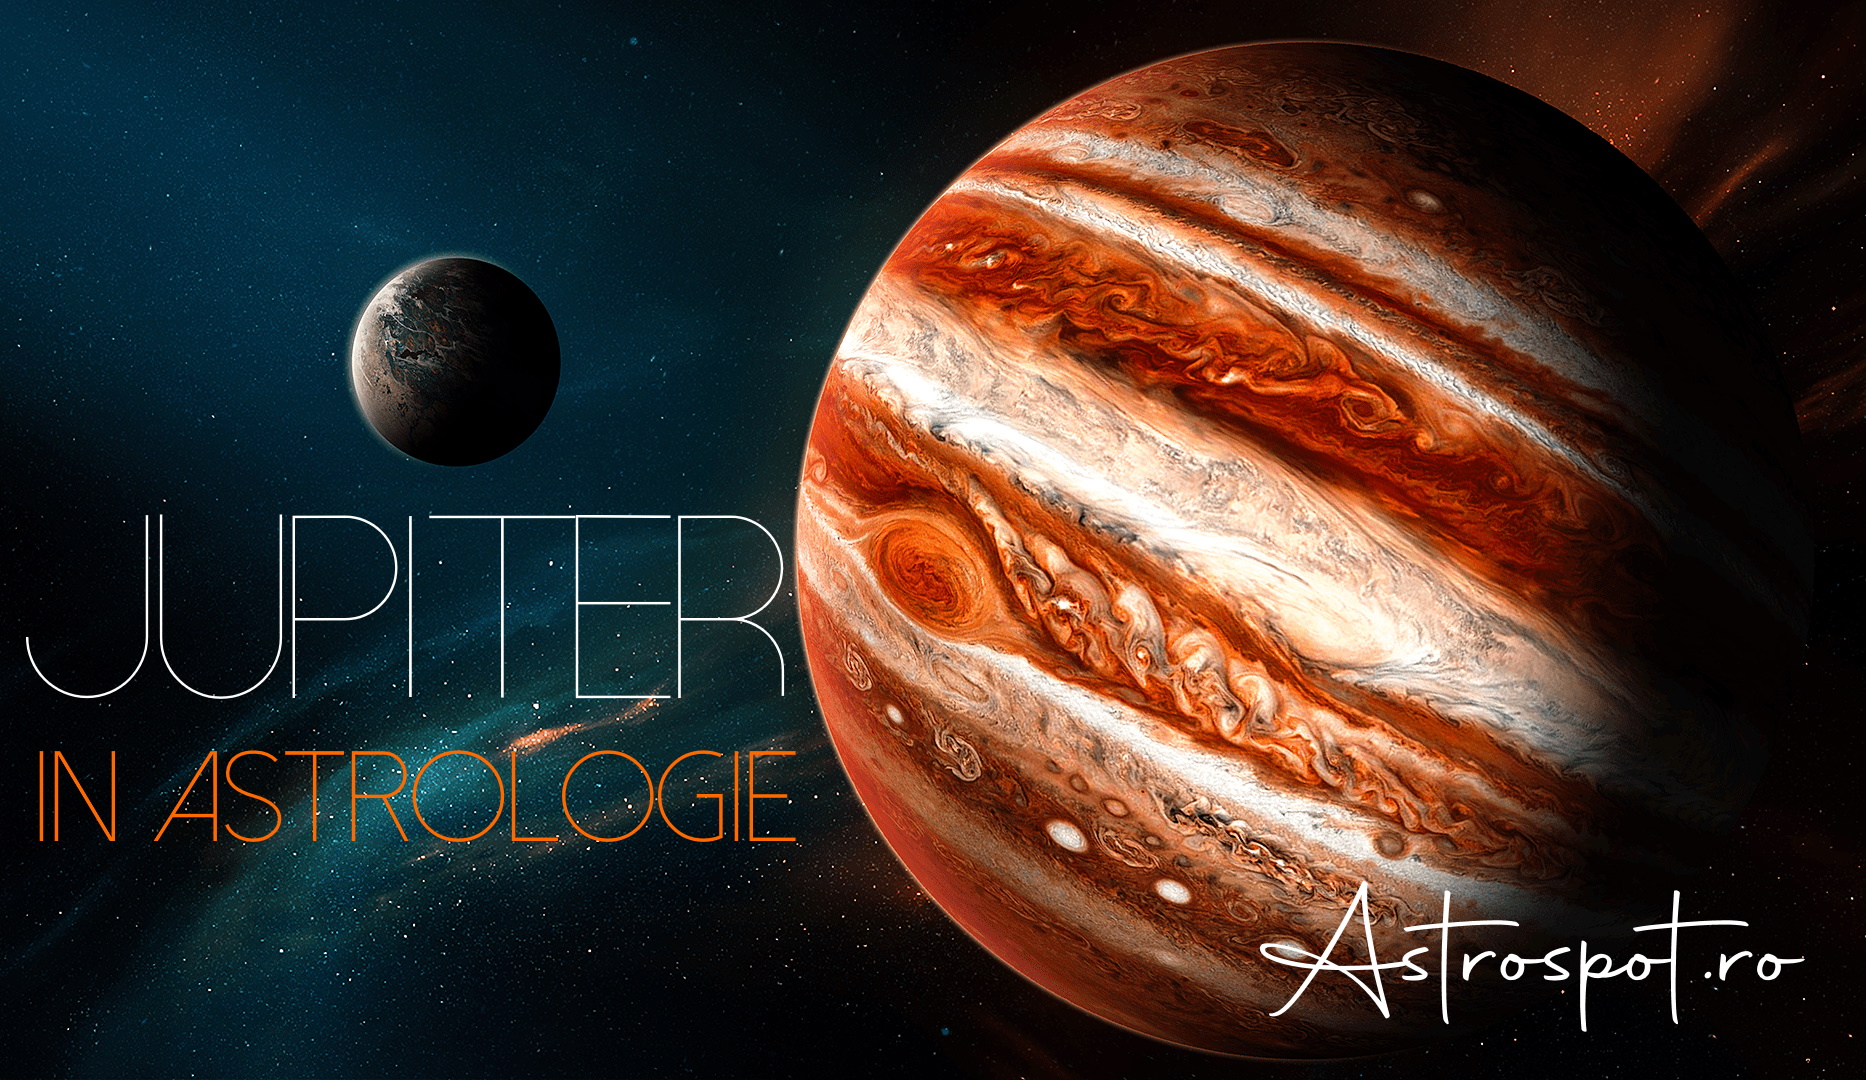 Jupiter in Astrologie